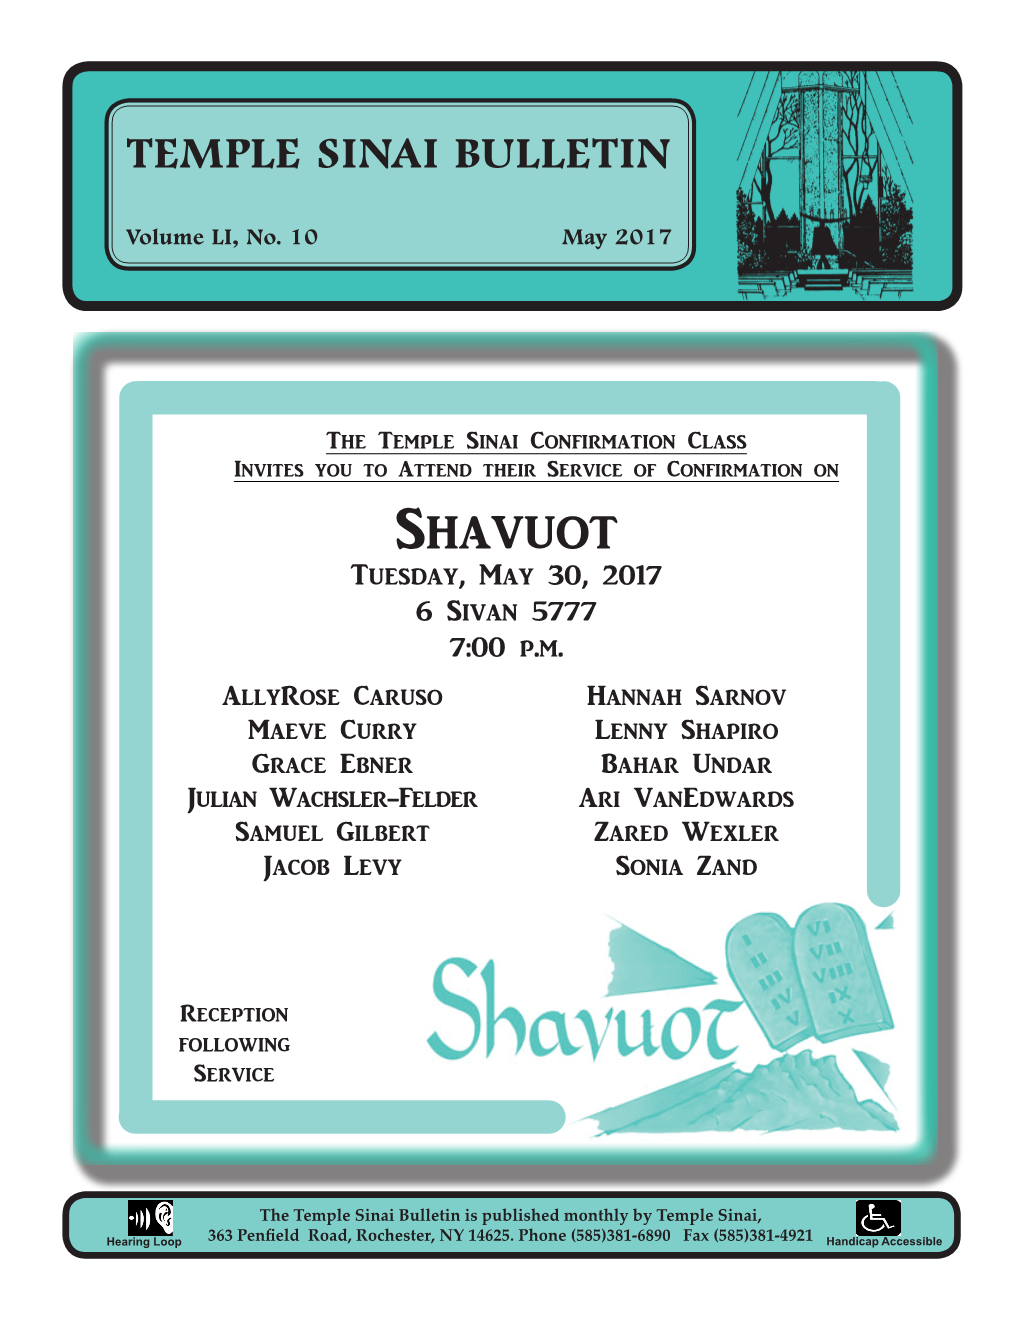 Shavuot Tuesday, May 30, 2017 6 Sivan 5777 7:00 P.M